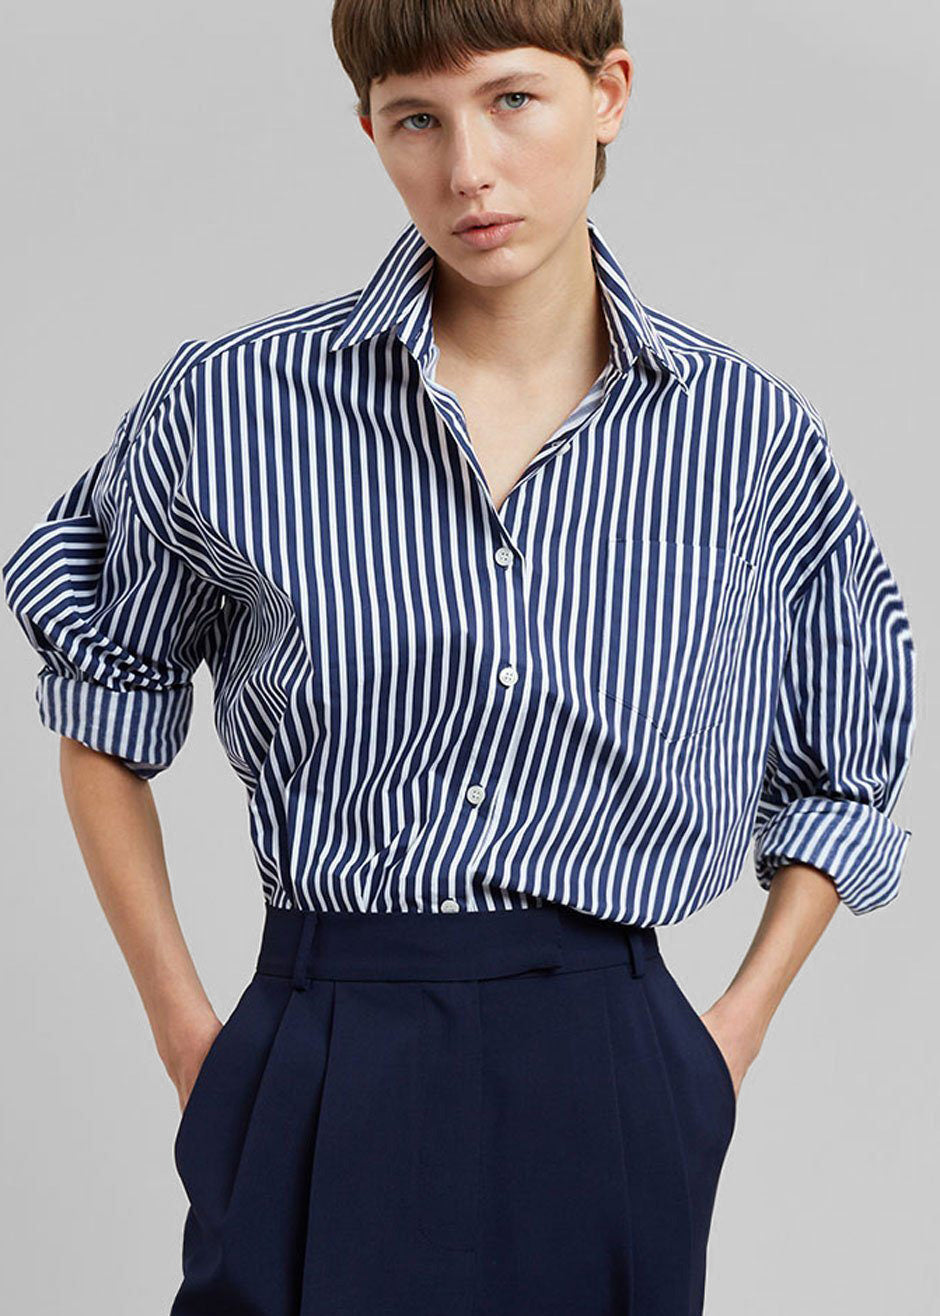 Melody Cotton Shirt - Navy Stripe